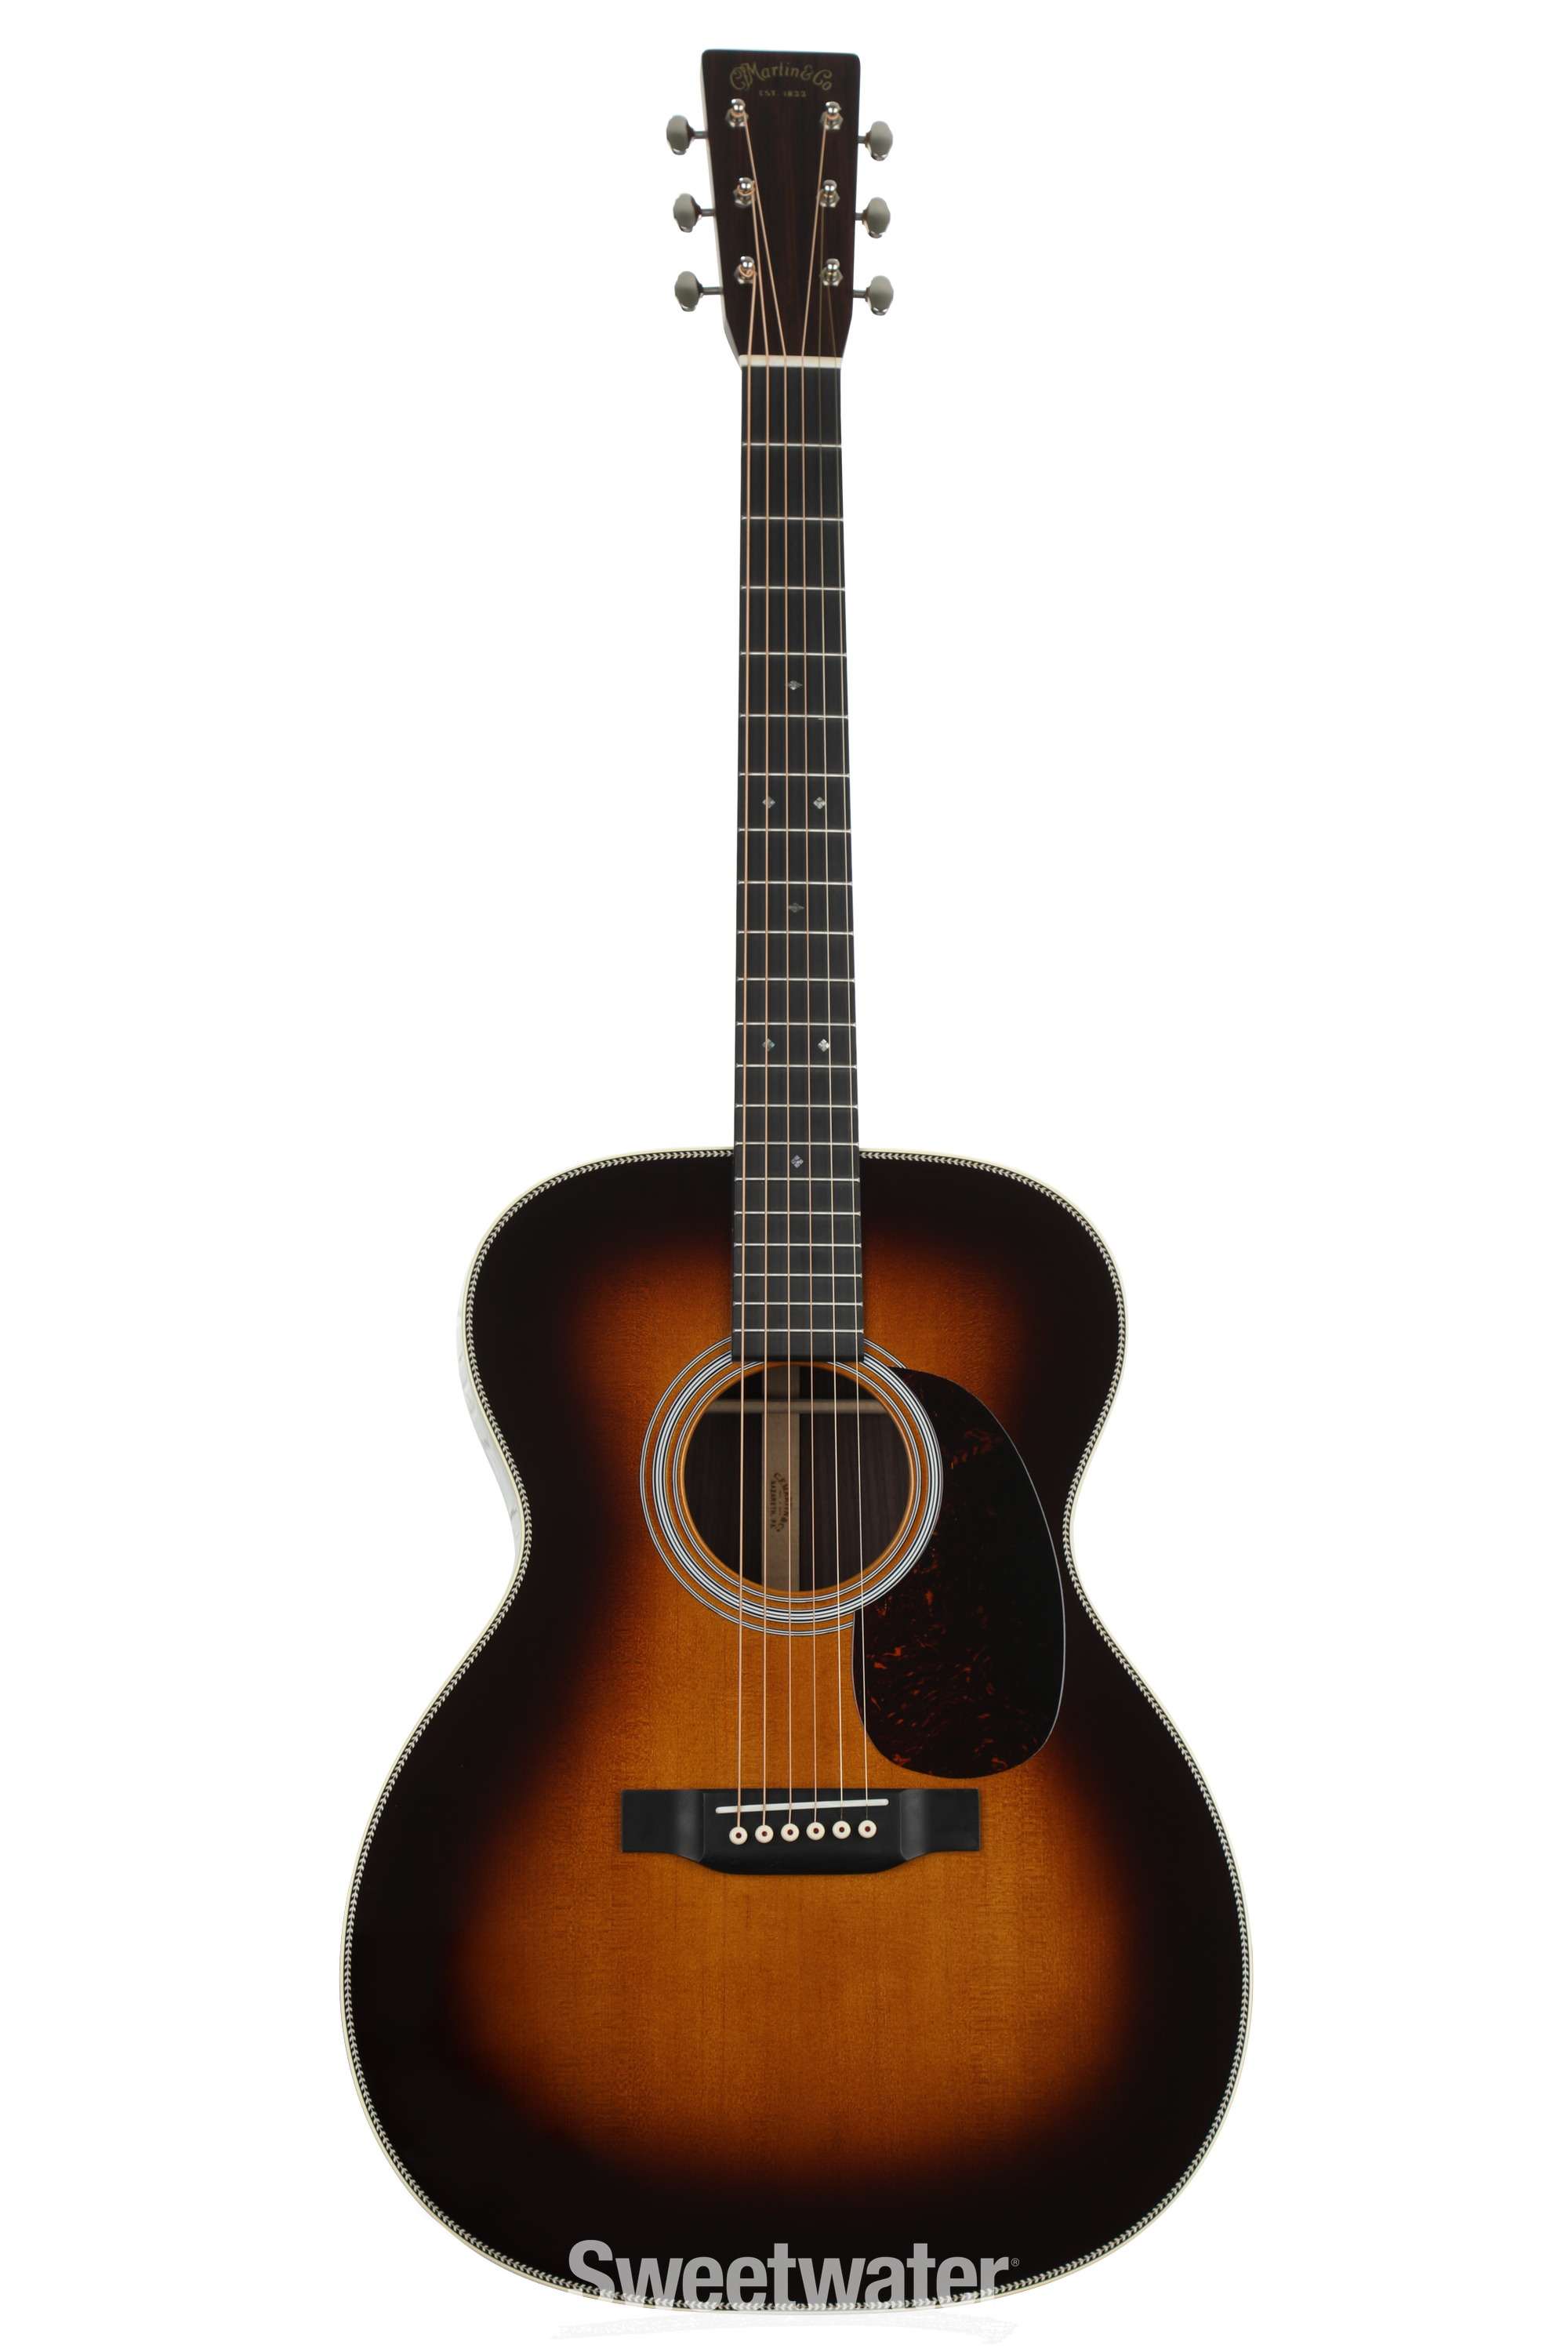 Martin 000-28 Acoustic Guitar - Sunburst